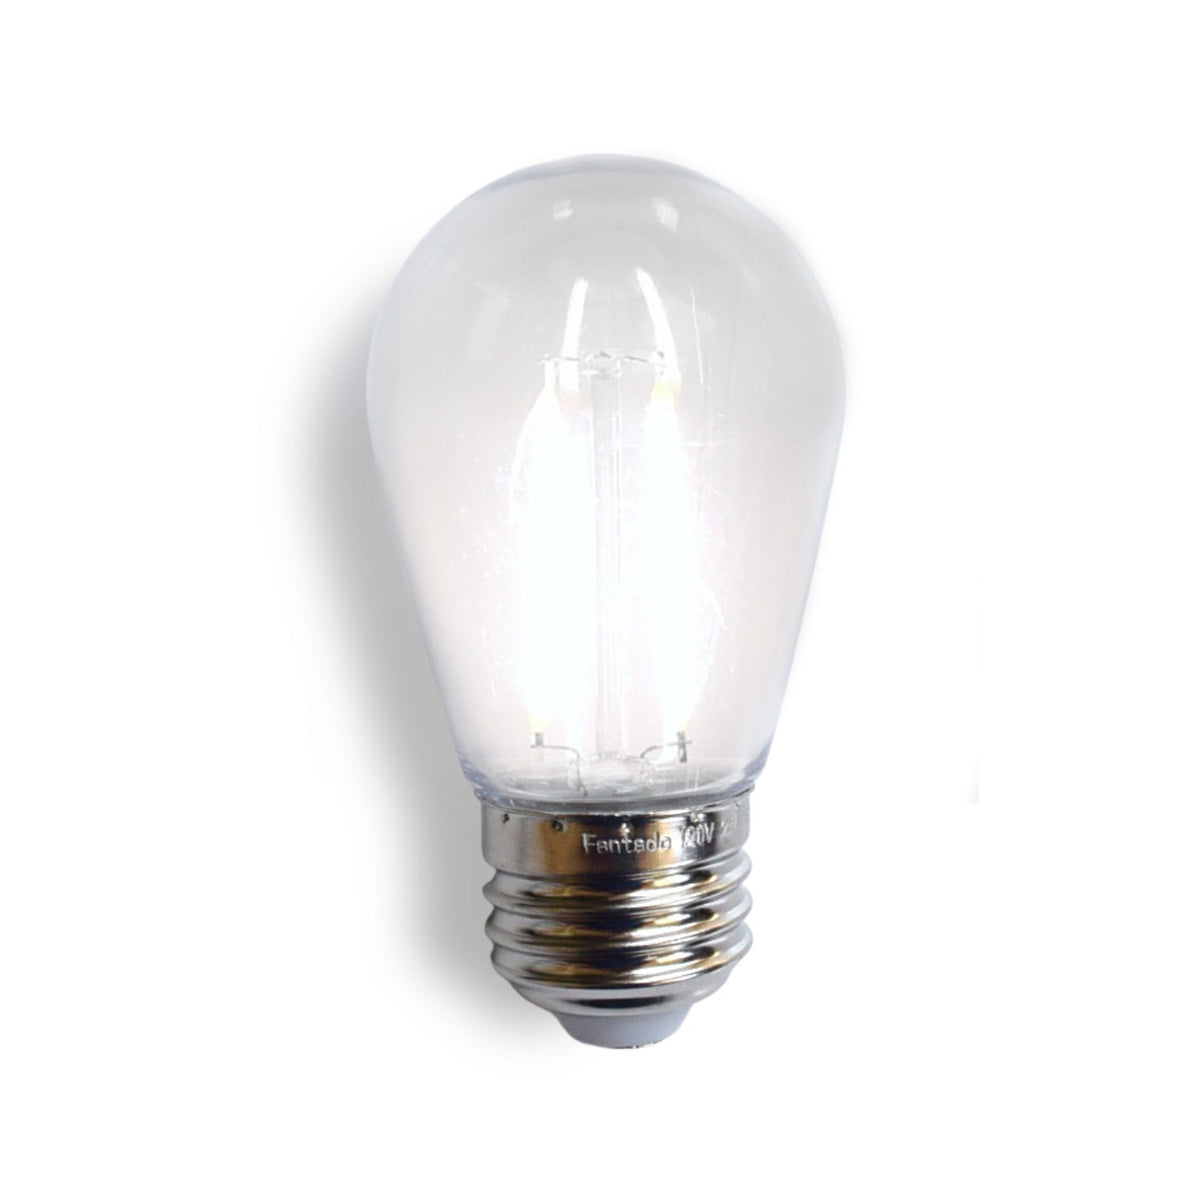 CORD + Shatterproof Bulb | White Weatherproof Outdoor Pendant Light Lamp Cord Combo Kit, S14 Cool White Bulb - Luna Bazaar | Boho &amp; Vintage Style Decor